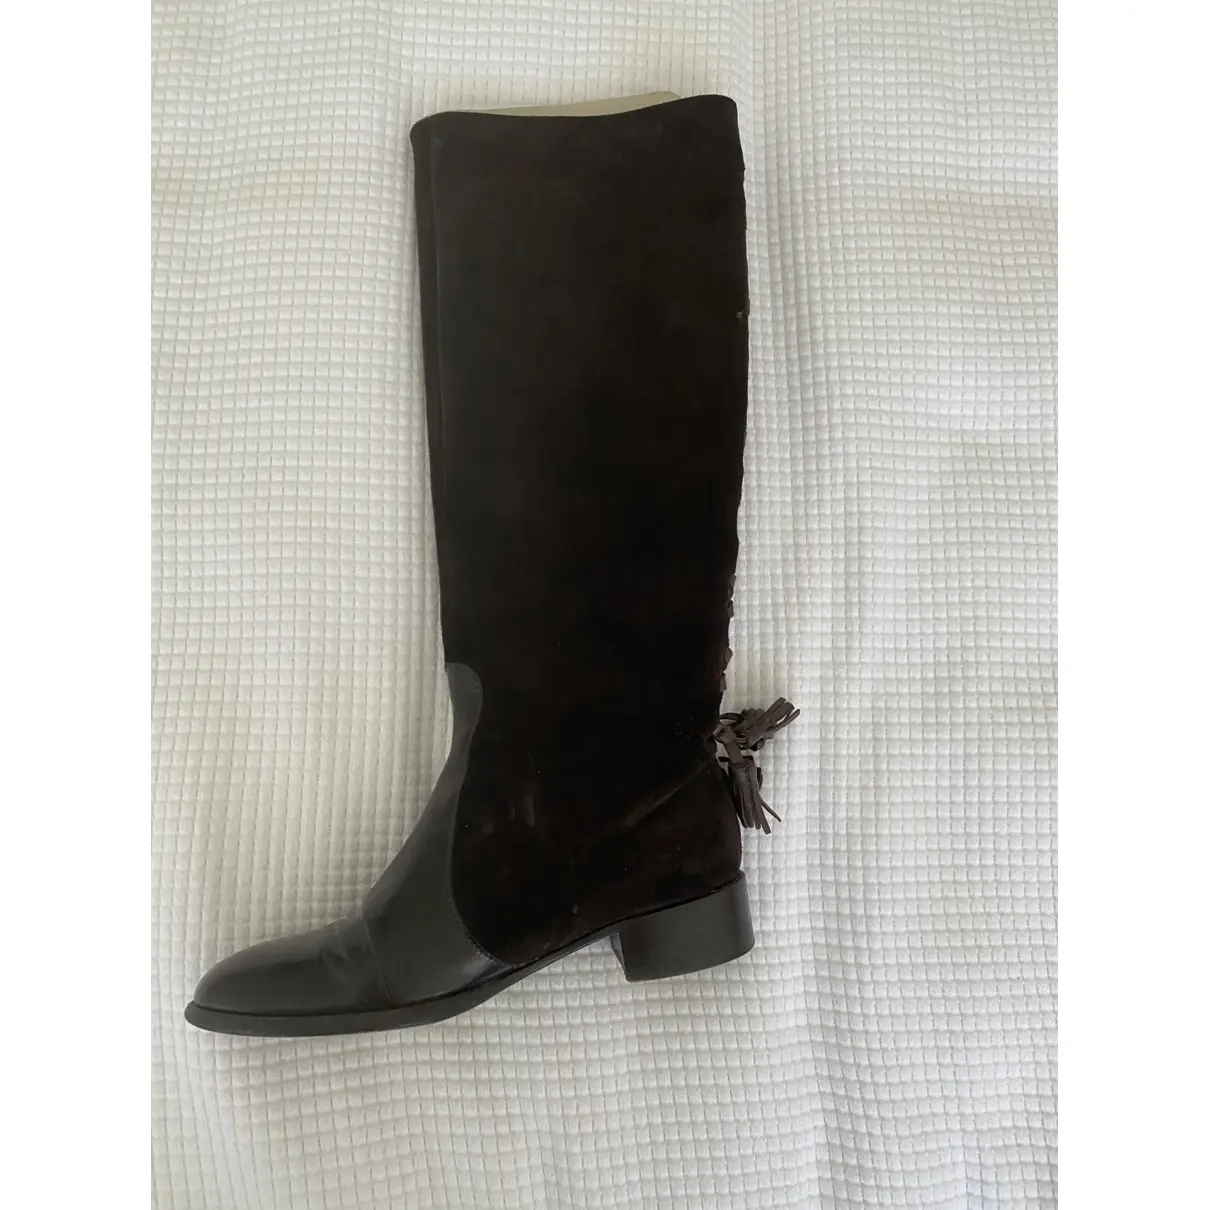 Buy Fendi Riding boots online